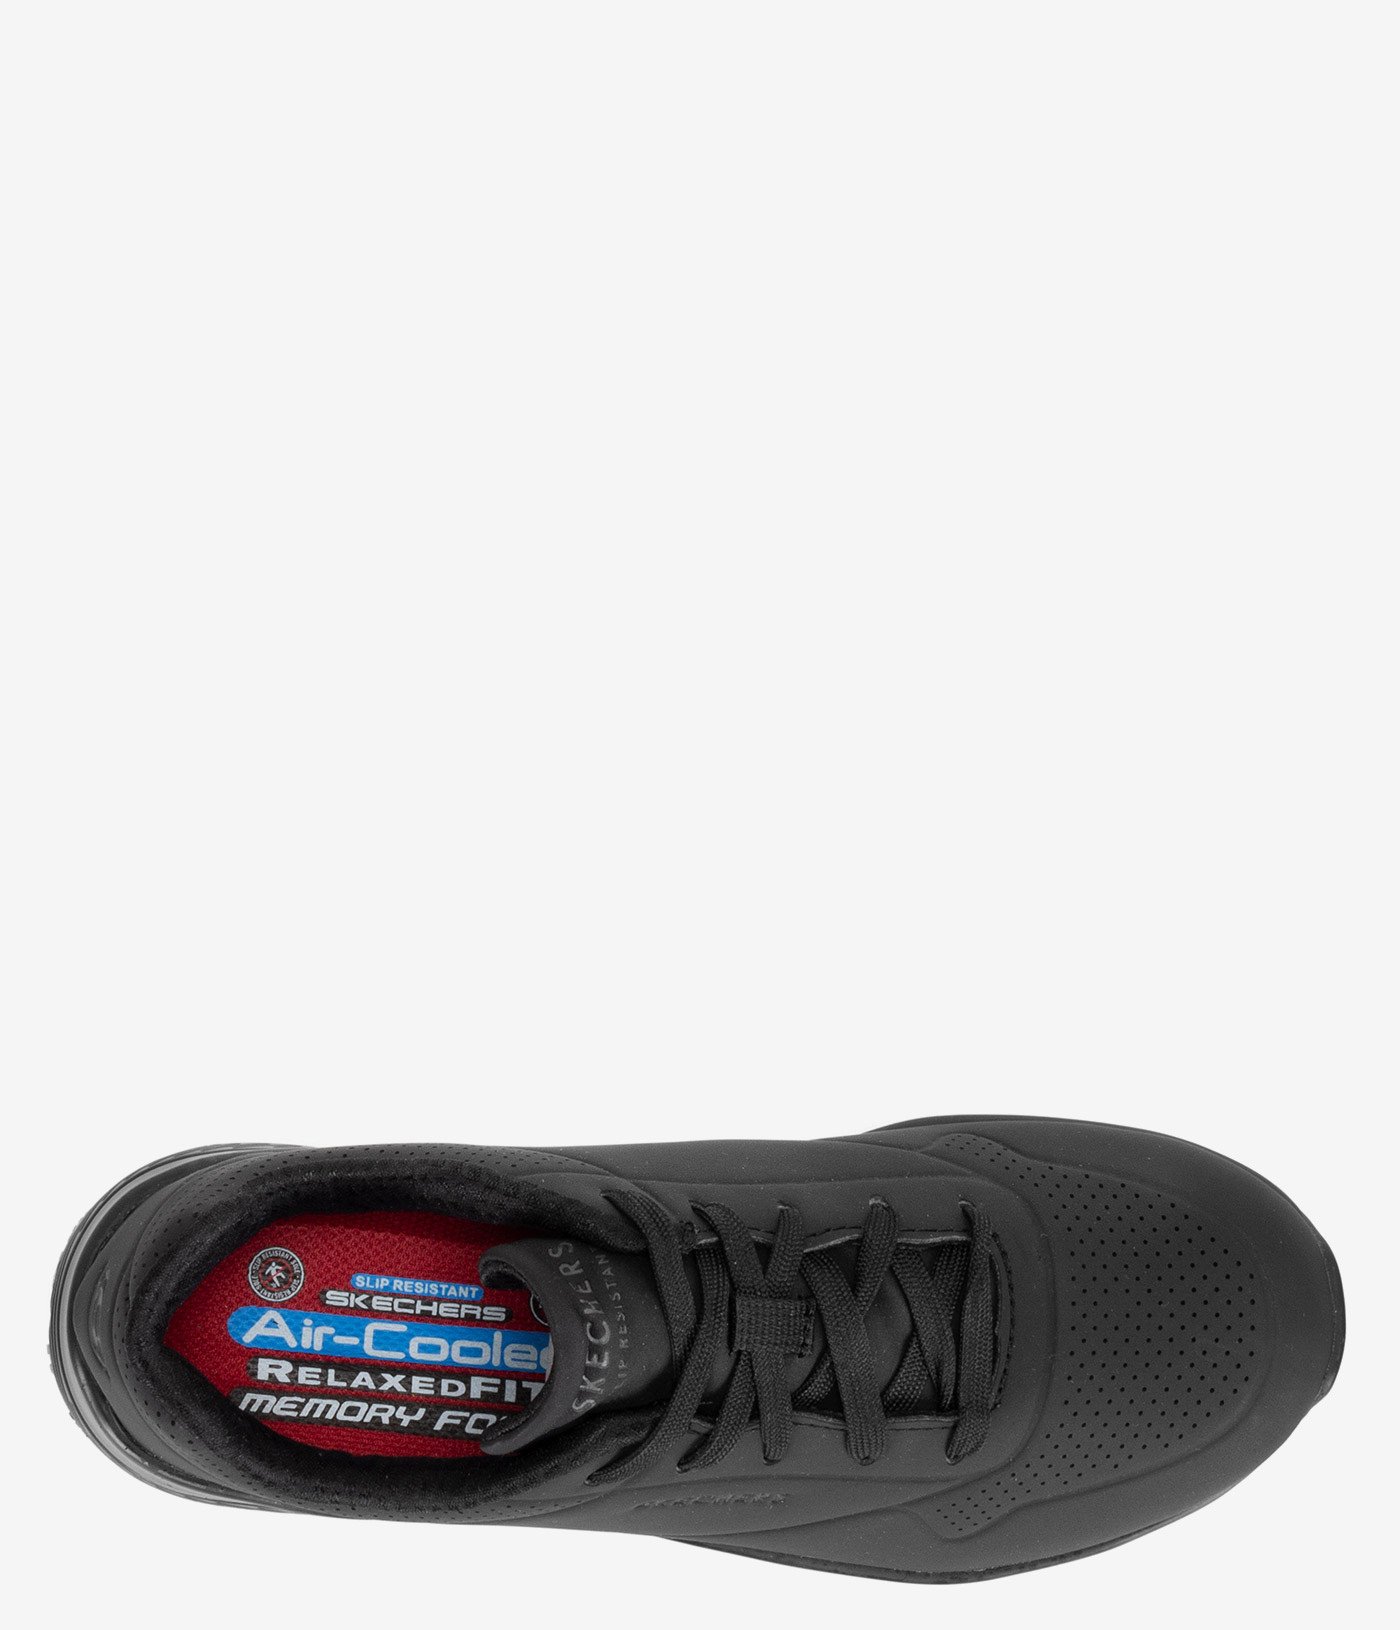 Skechers relaxed fit memory foam shoes, Guardar 86% disponible gran  descuento 